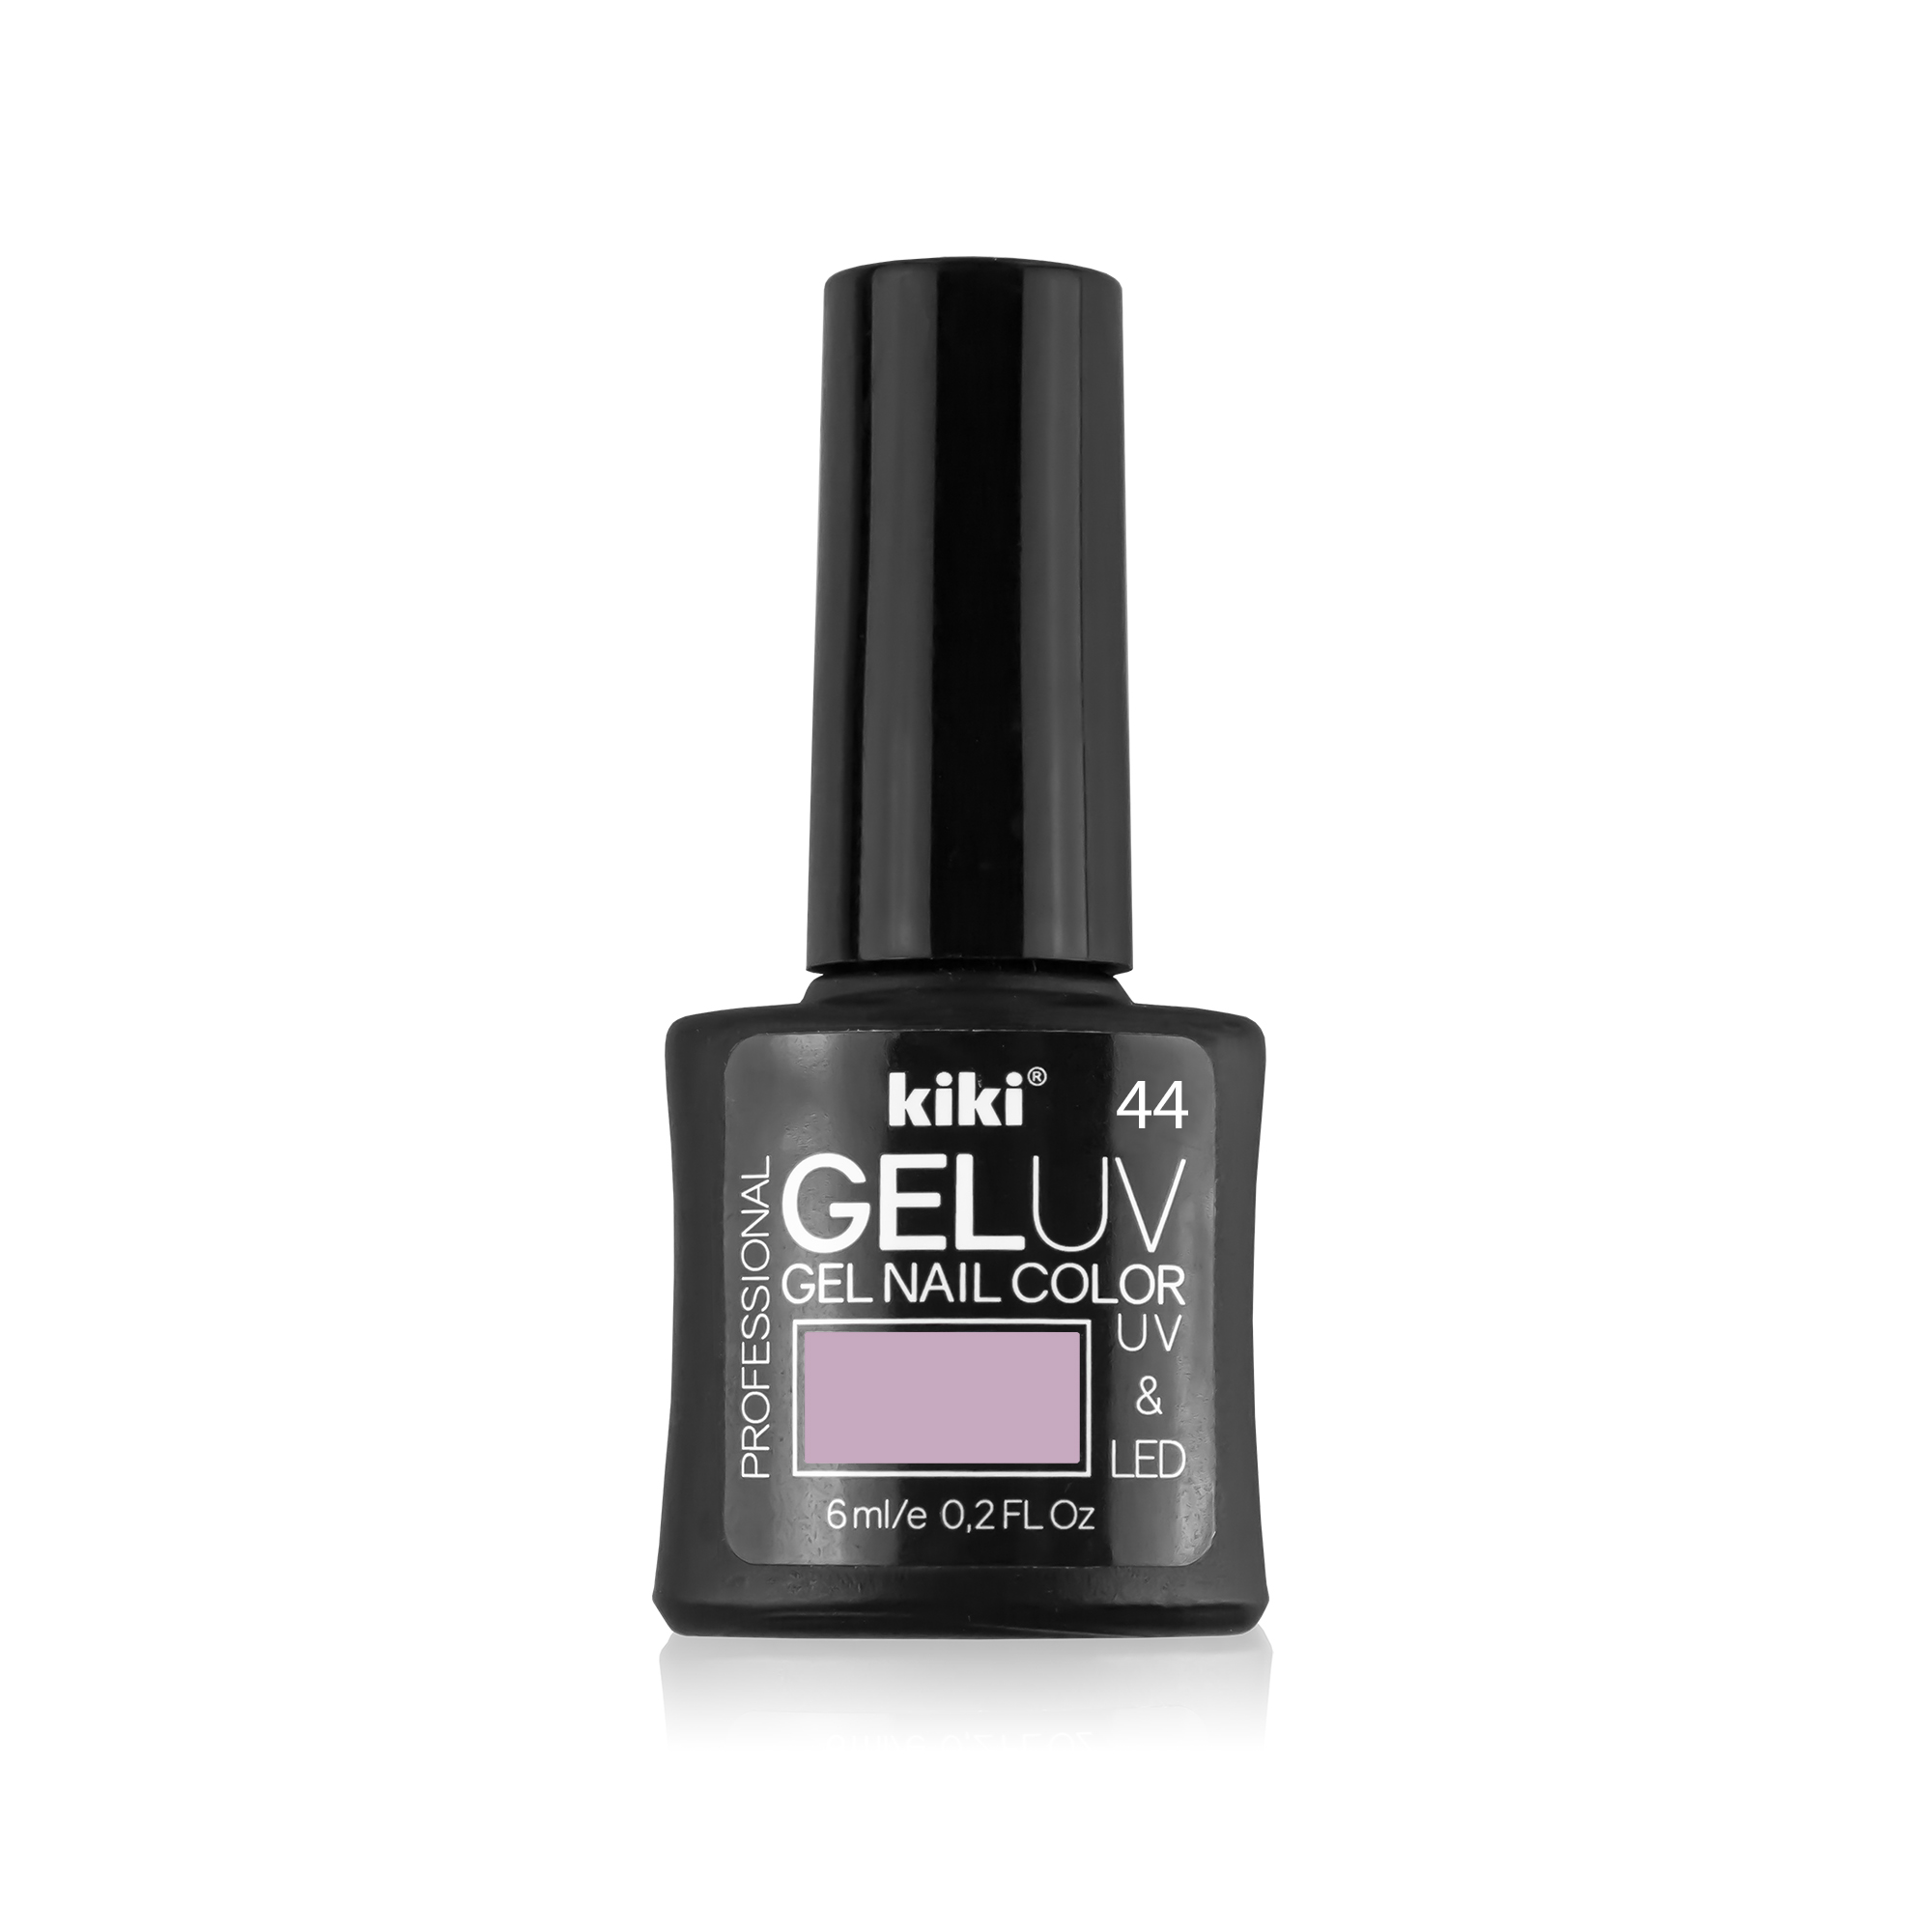 Гель-лак для ногтей Kiki Gel Uv&Led 44 светло-розово лиловый kiki каучуковая база для ногтей прозрачная gel uv